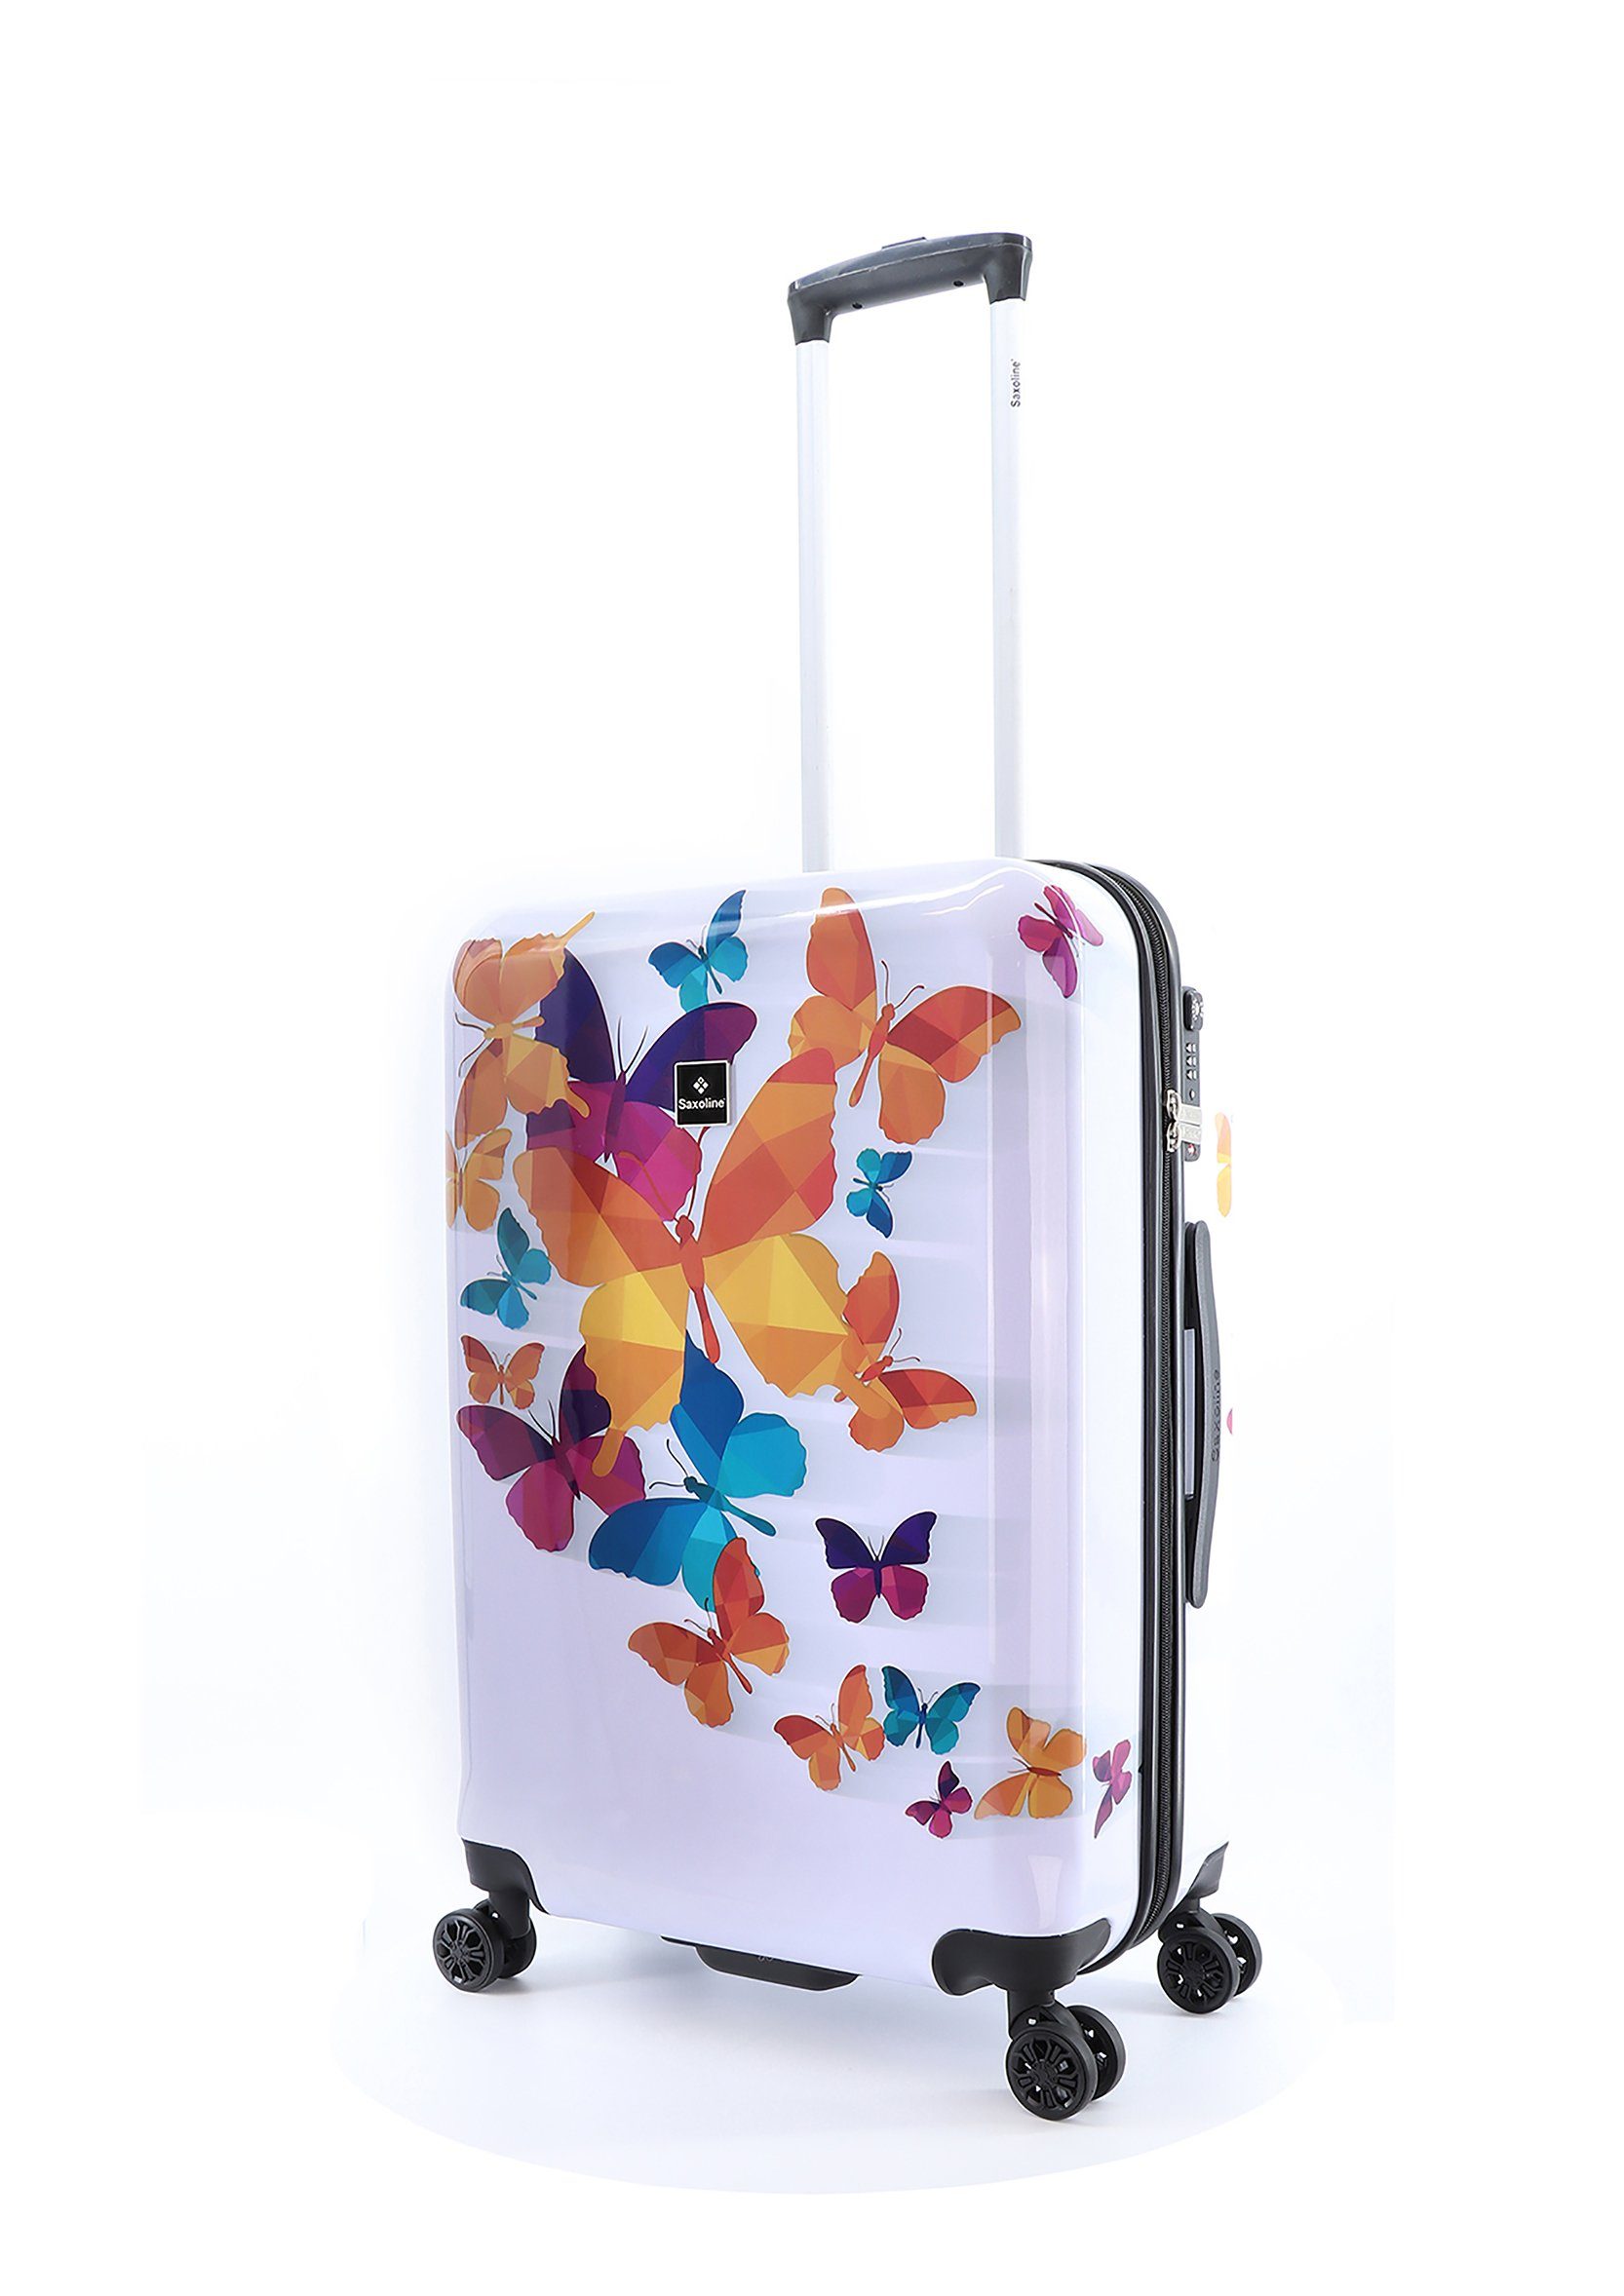 arretierbarem Schmetterling, Aluminium-Trolleysystem Saxoline® mit Koffer